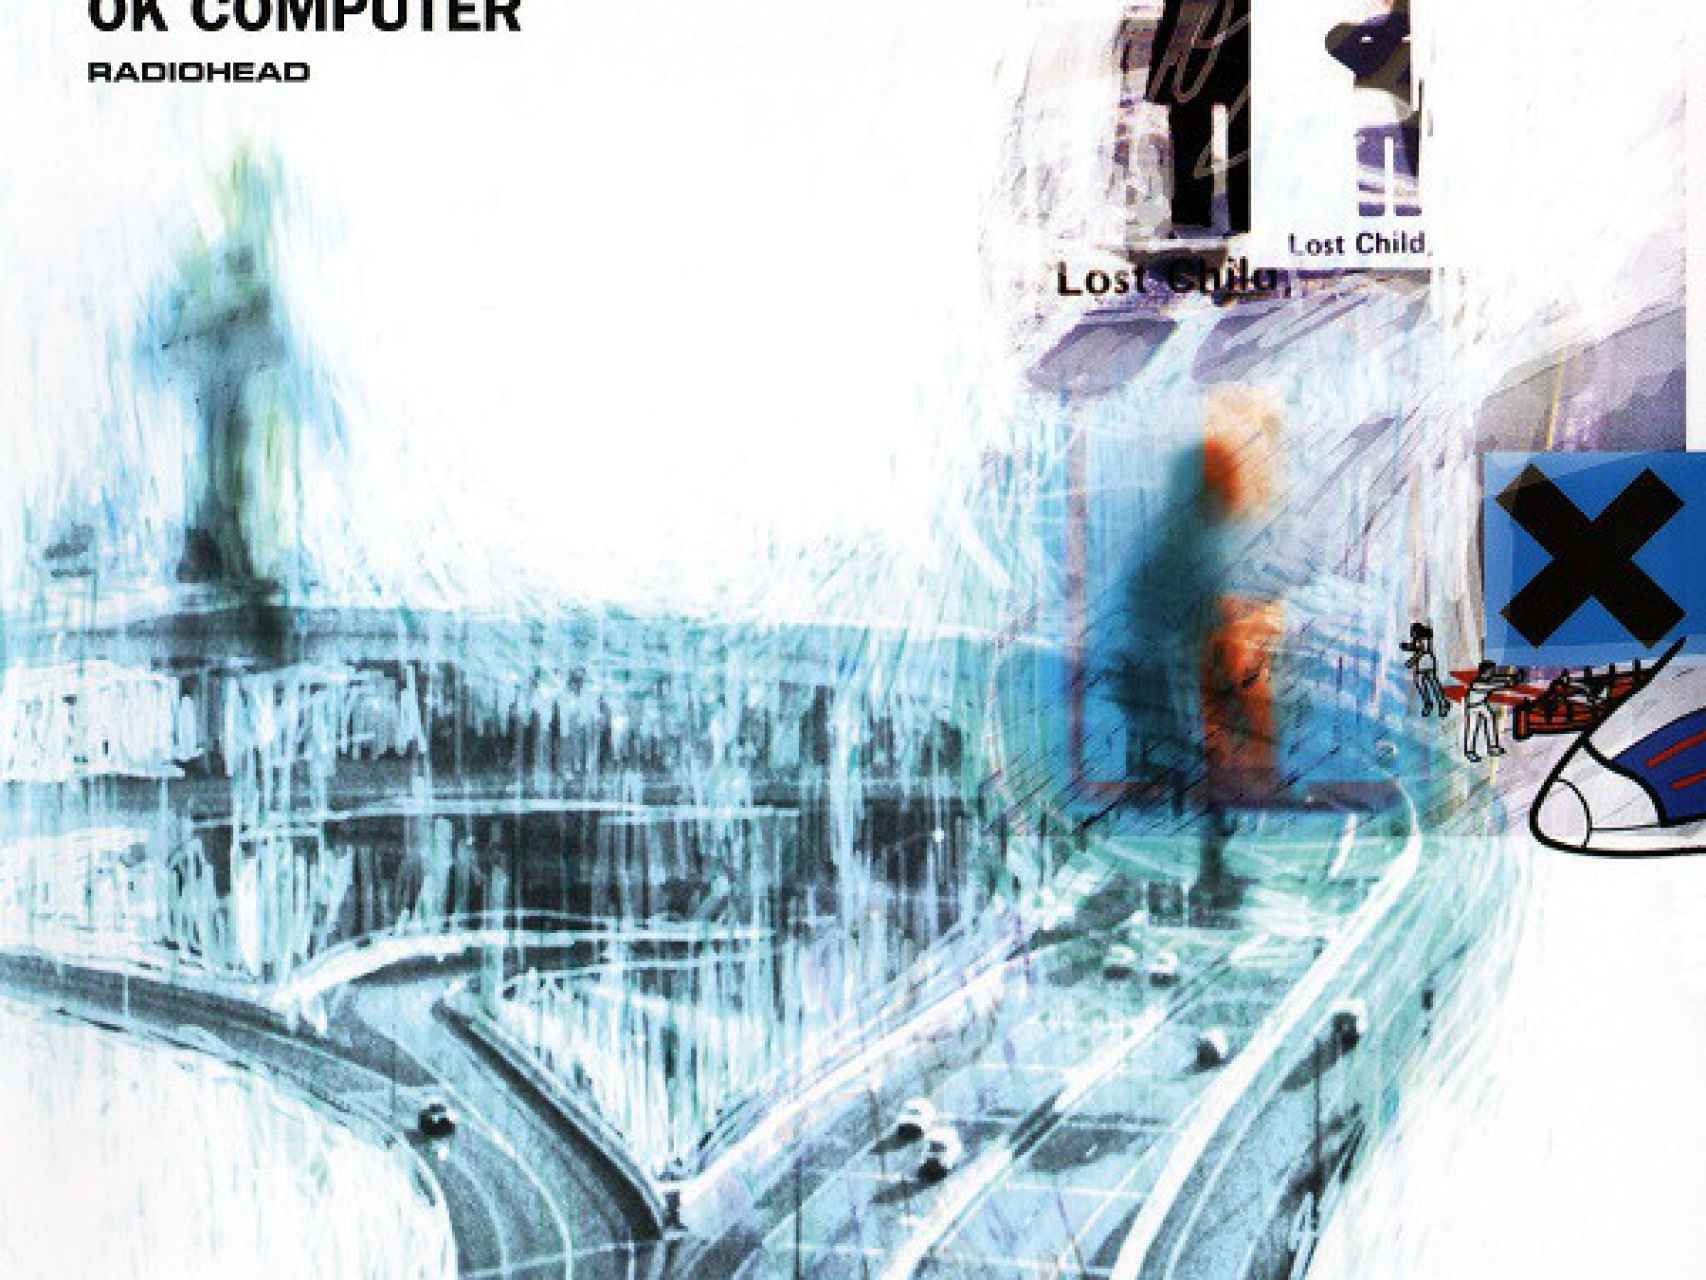 OK Computer de Radiohead.